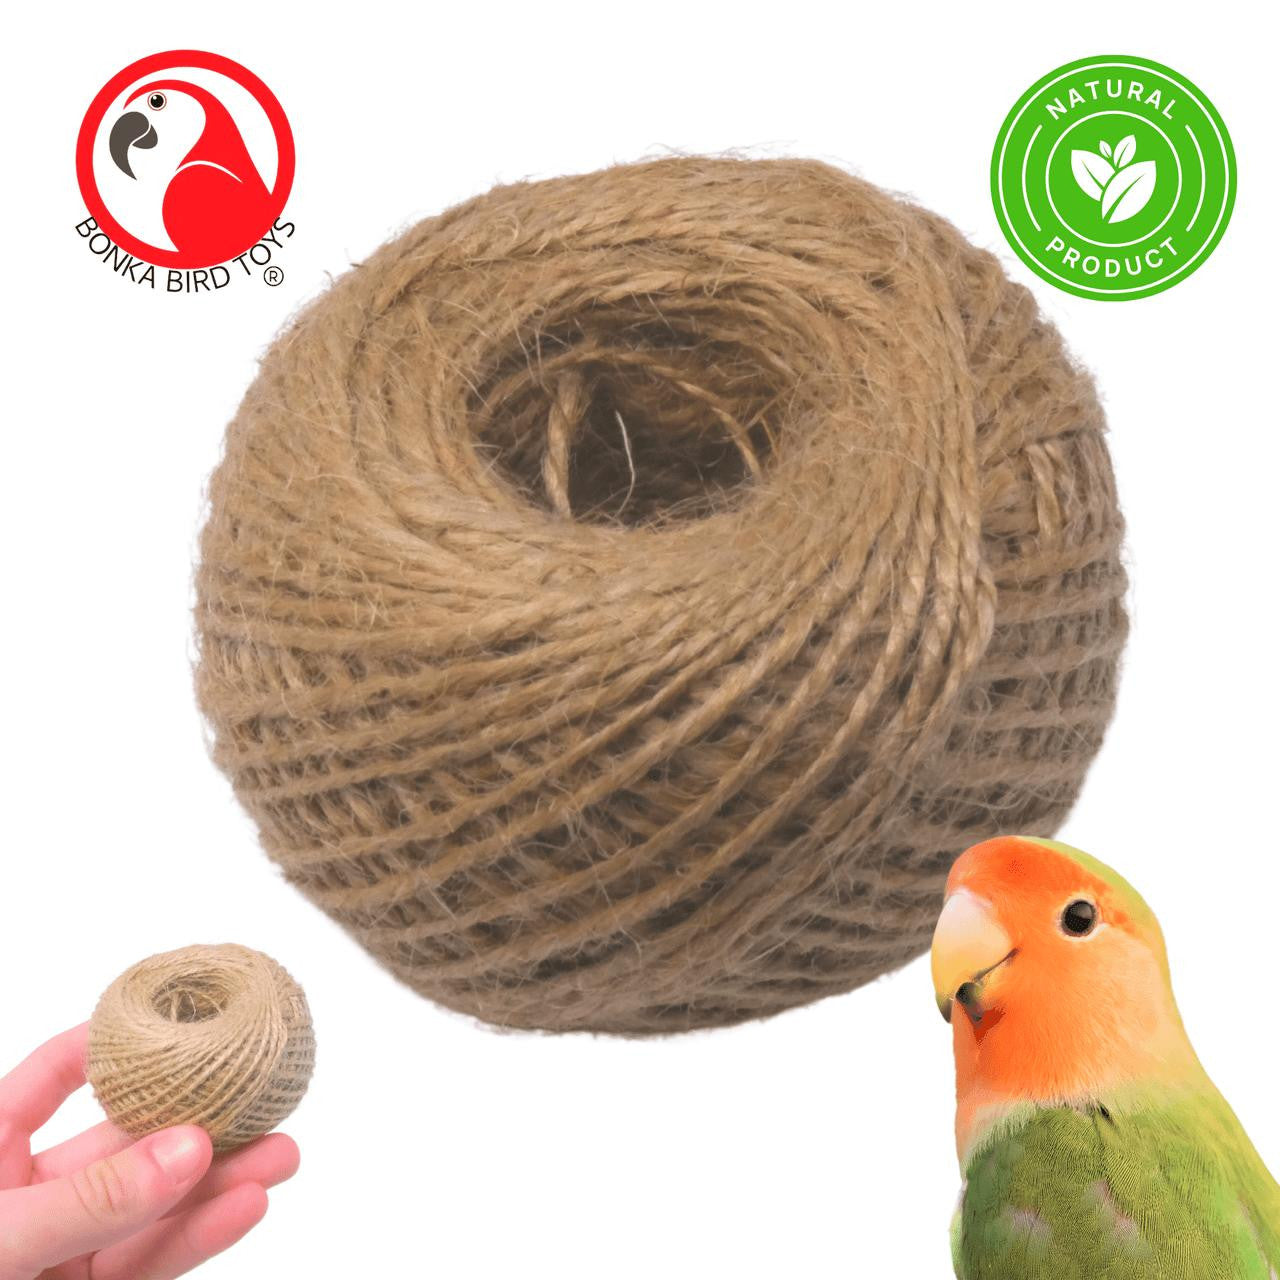 1330 Natural Twisted Jute String Rope 220 ft by bonka bird – Bonka Bird Toys